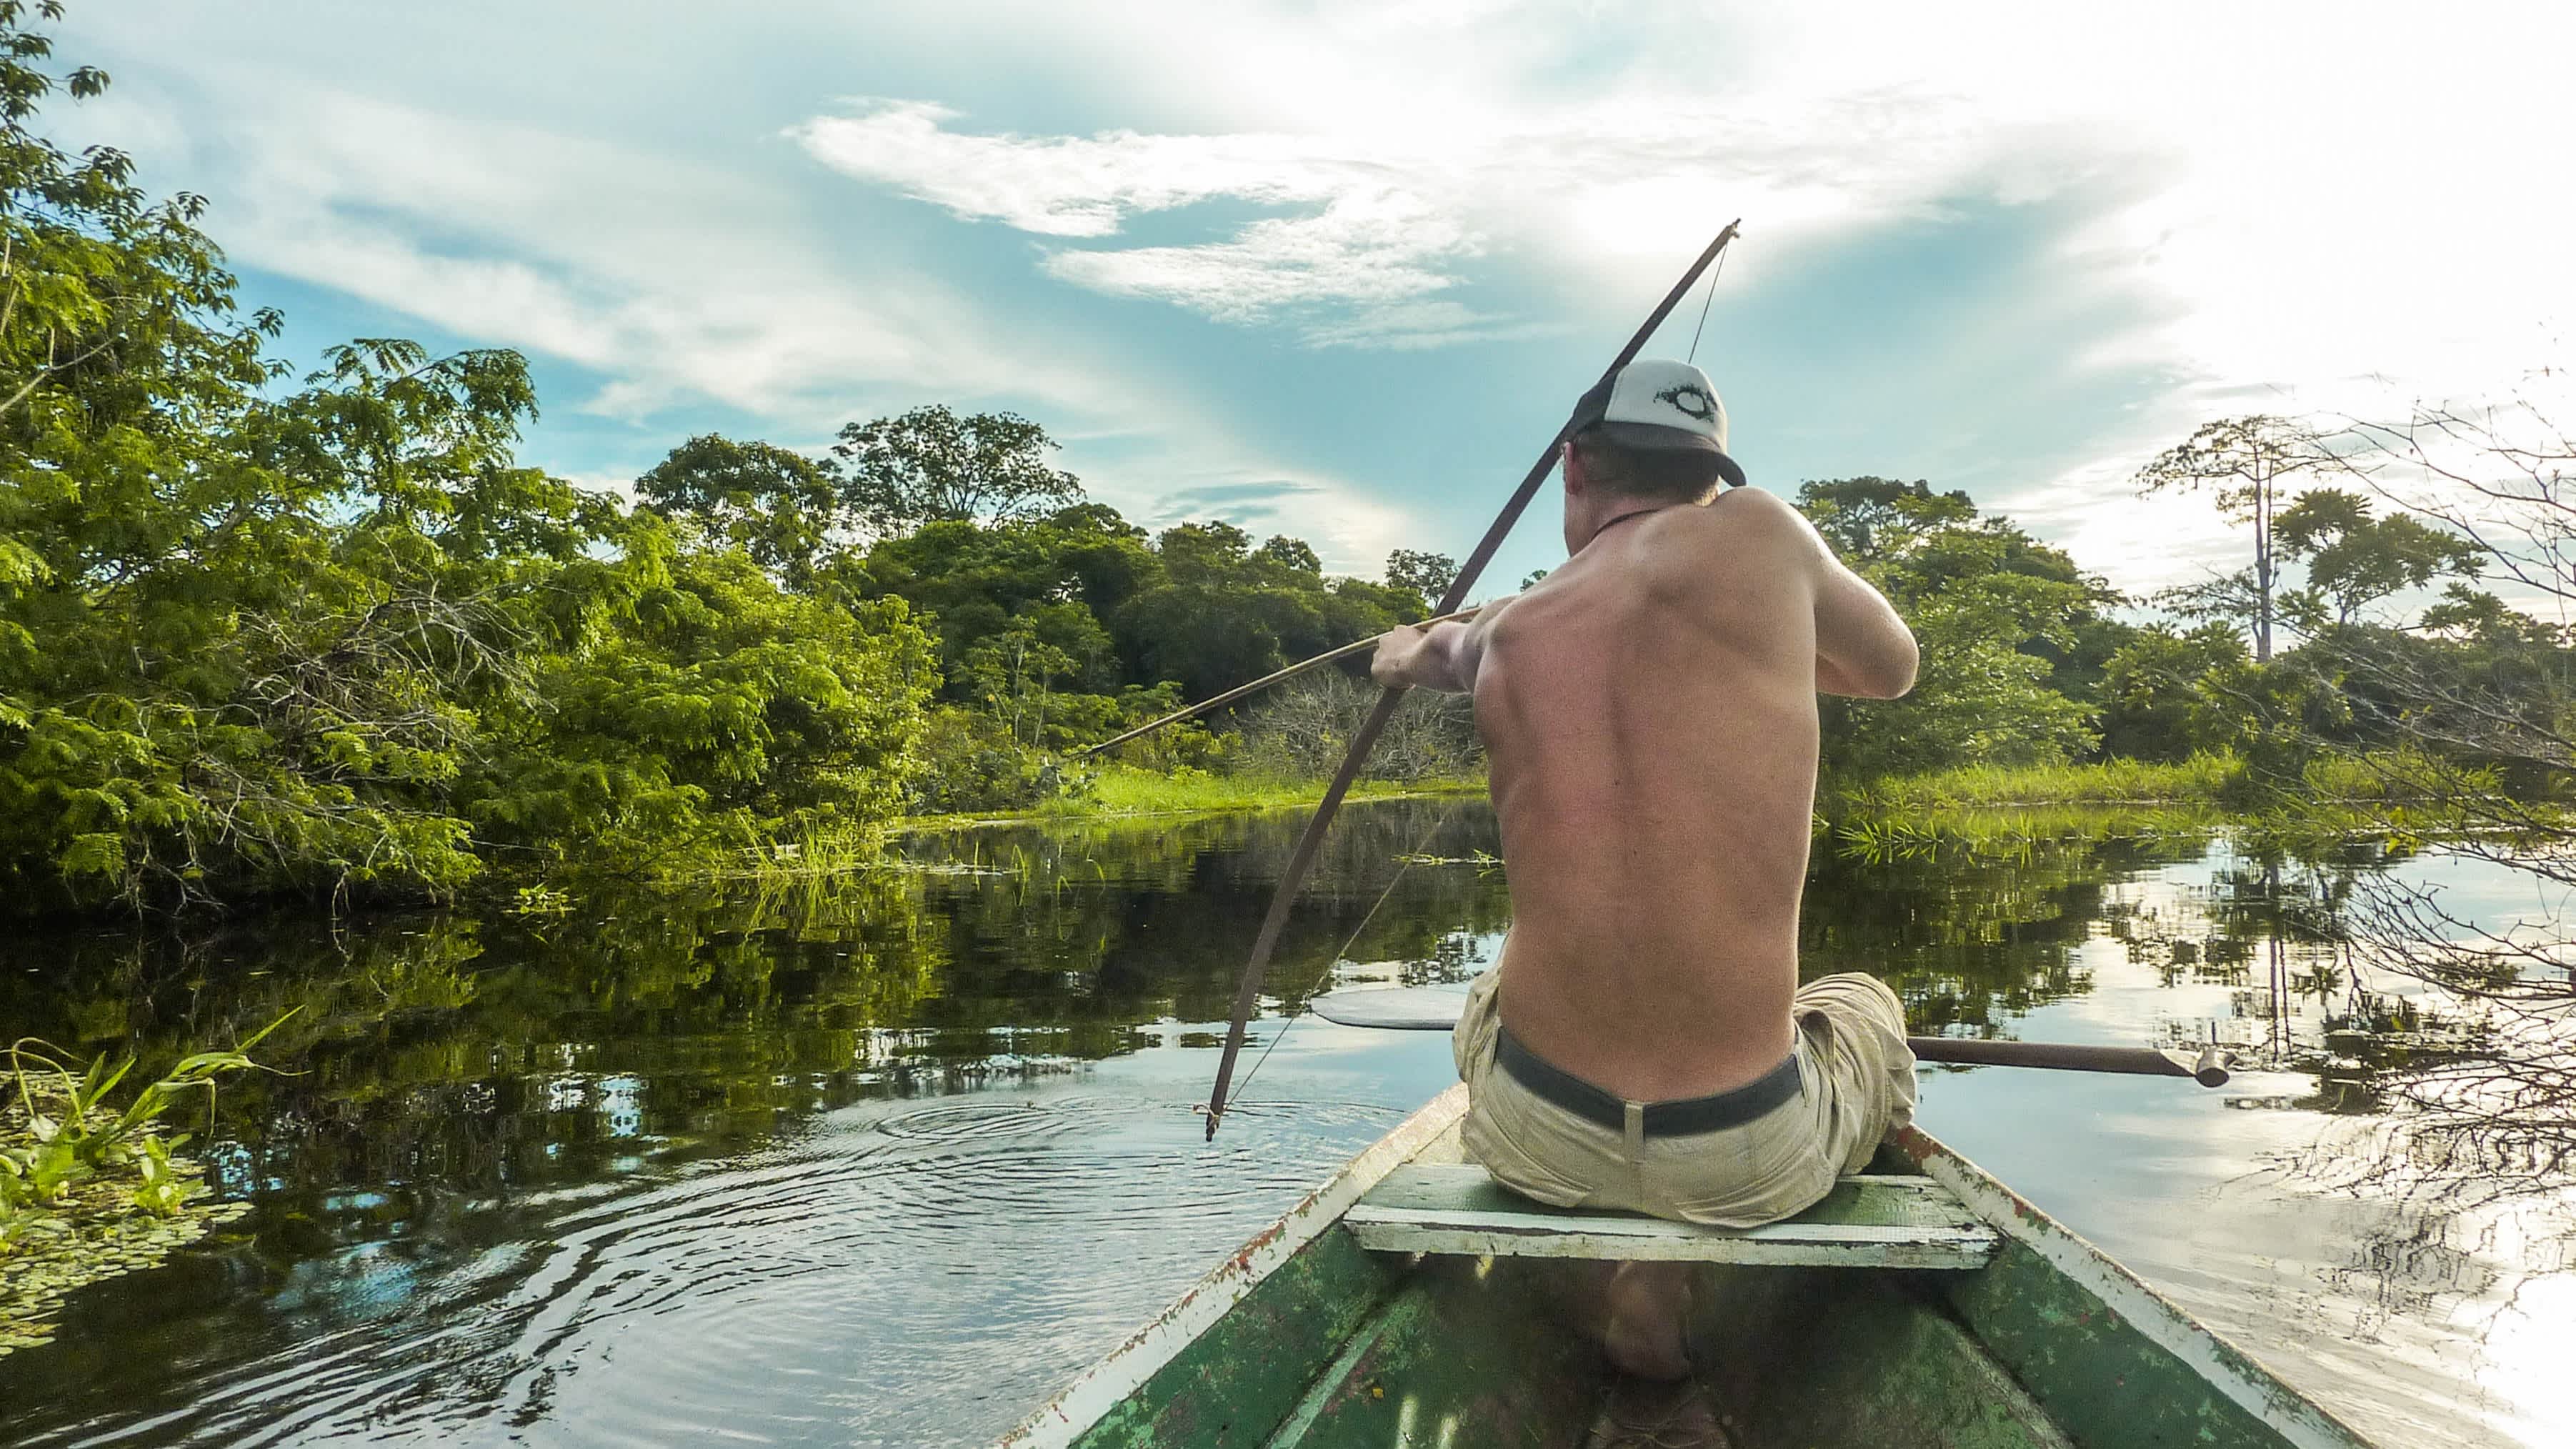 Bogenjagd inmitten des Amazonas-Regenwaldes in Brasilien.

